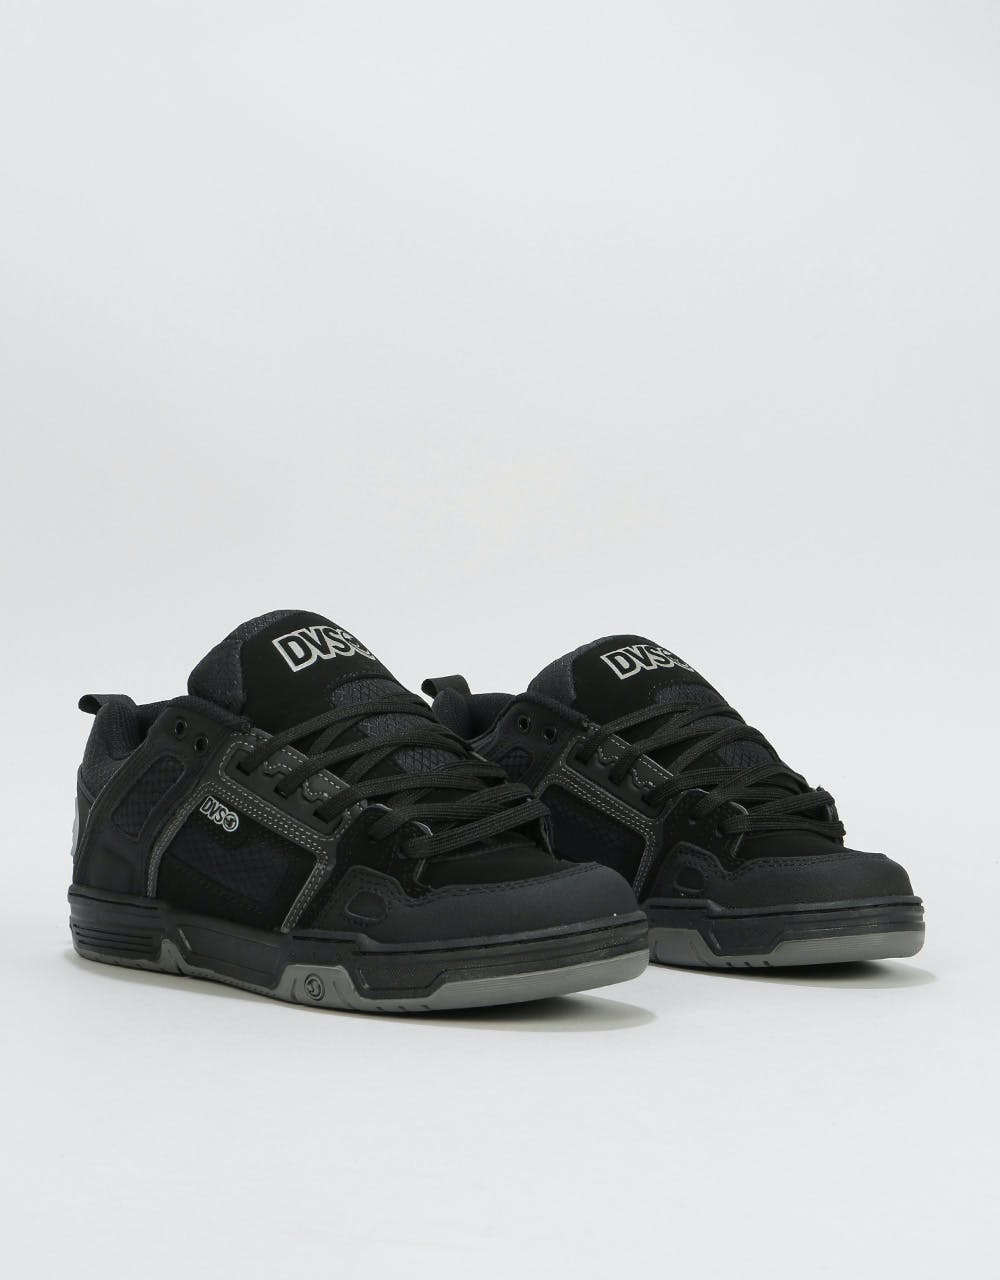 DVS Commanche Skate Shoes - Black Reflective/Charcoal Nubuck